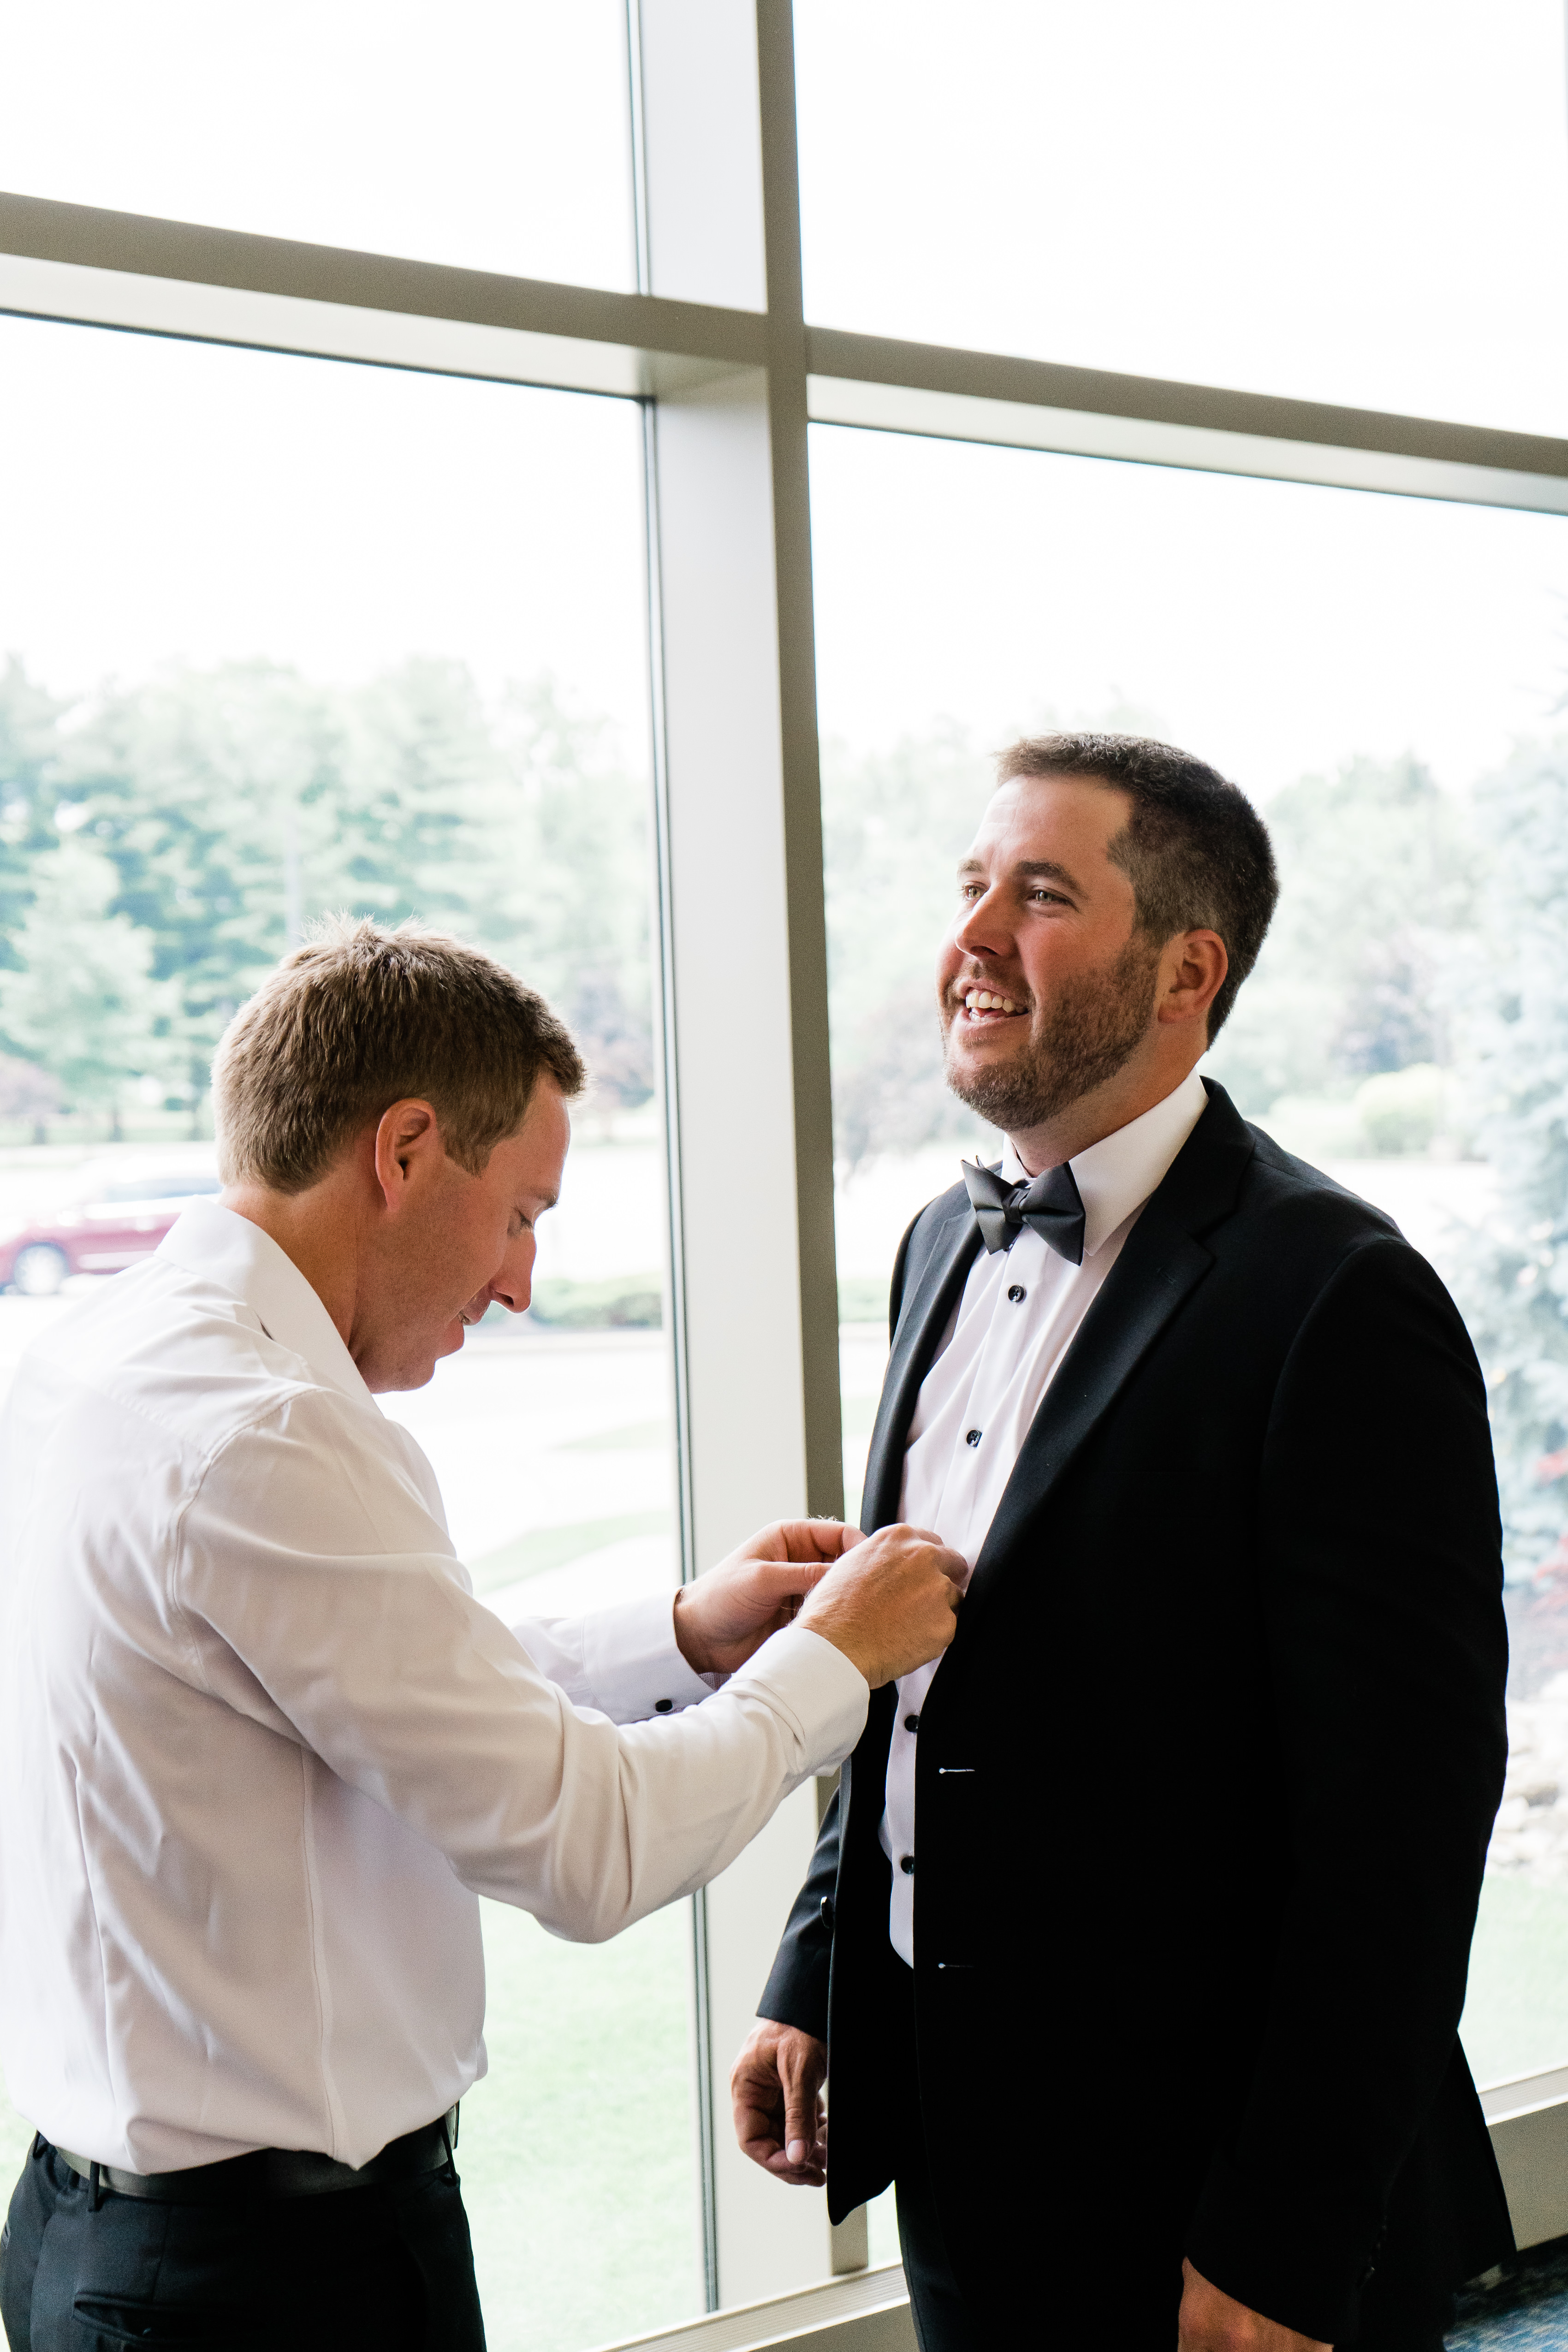 Fort Wayne wedding photographer captures groom getting ready with groomsmen